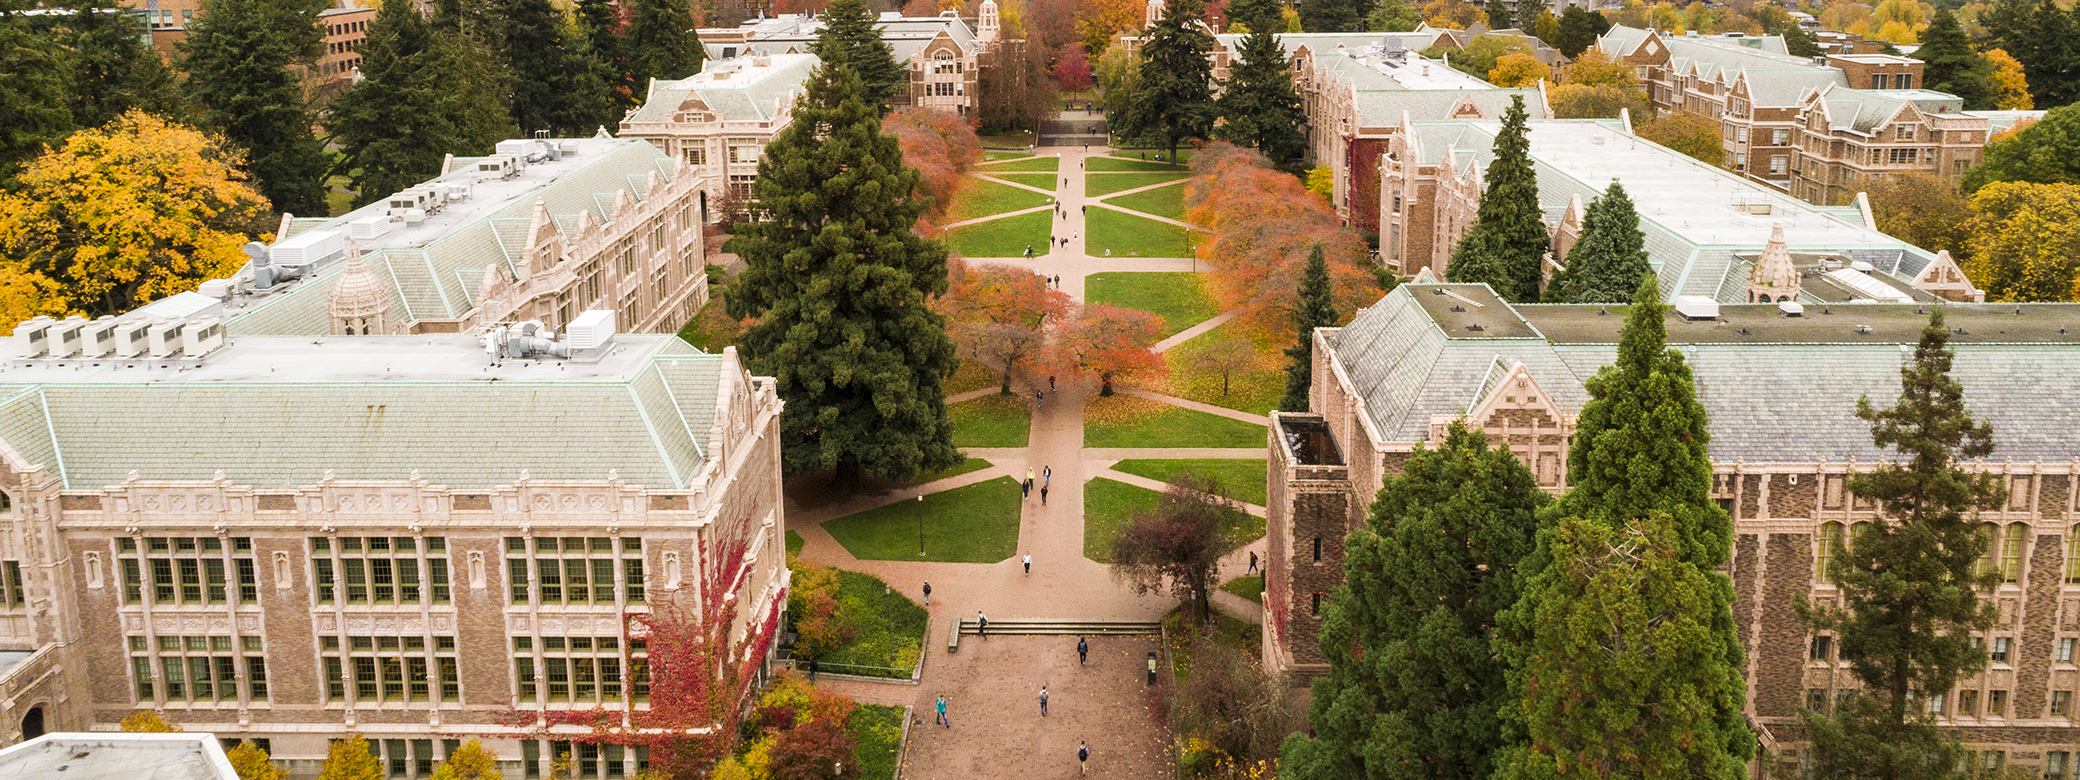 University of Washington overhead view of The Quad